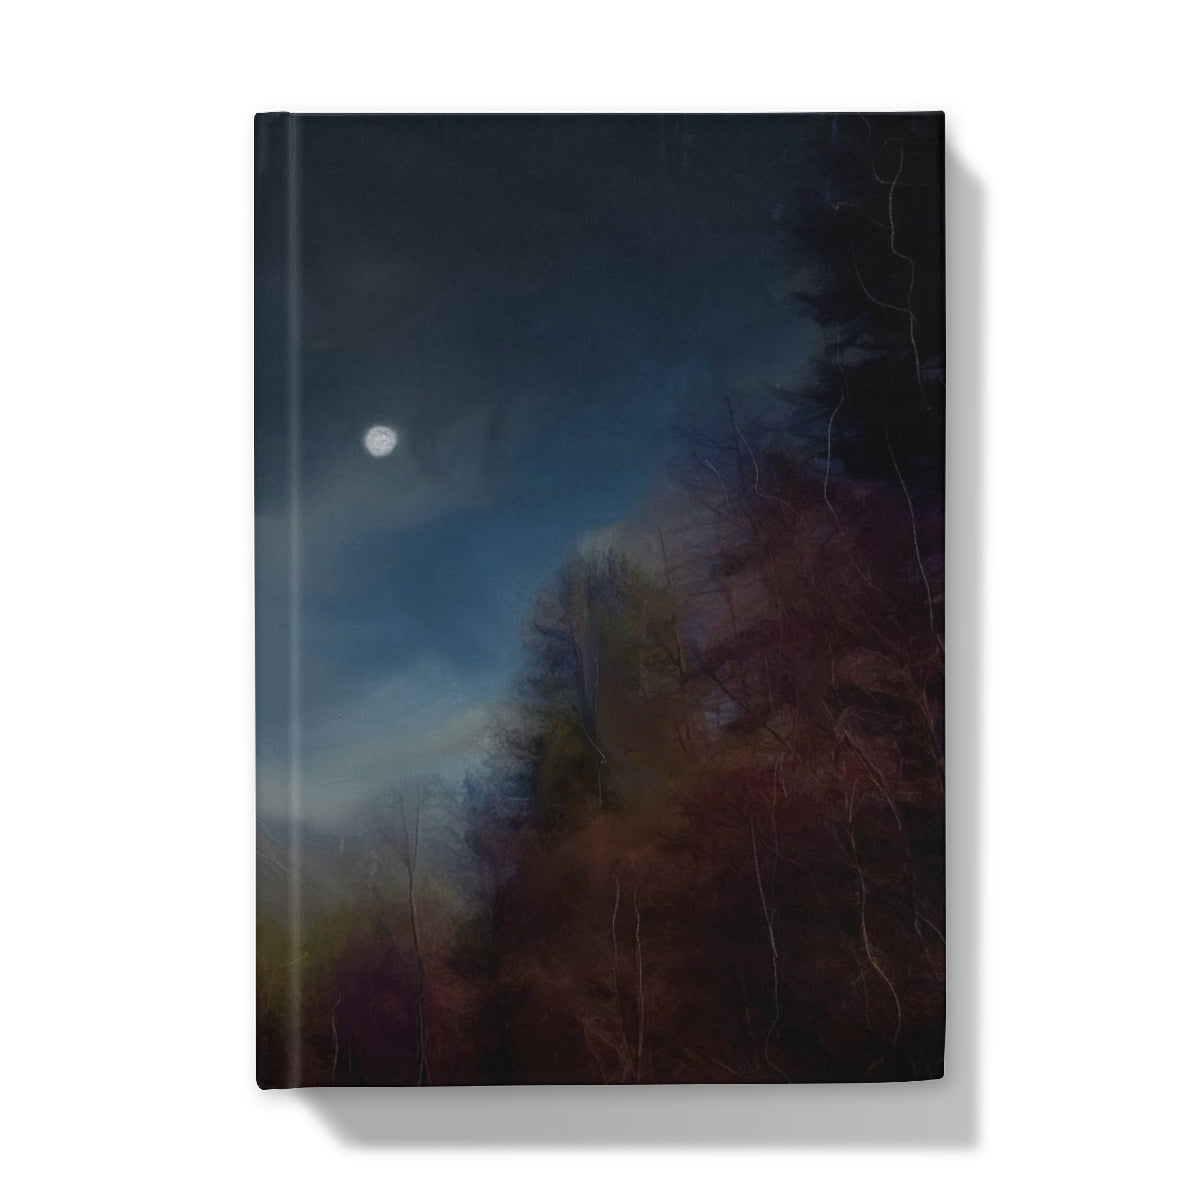 Glencoe Lochan Moonlight Art Gifts Hardback Journal-Journals & Notebooks-Scottish Lochs & Mountains Art Gallery-A5-Lined-Paintings, Prints, Homeware, Art Gifts From Scotland By Scottish Artist Kevin Hunter